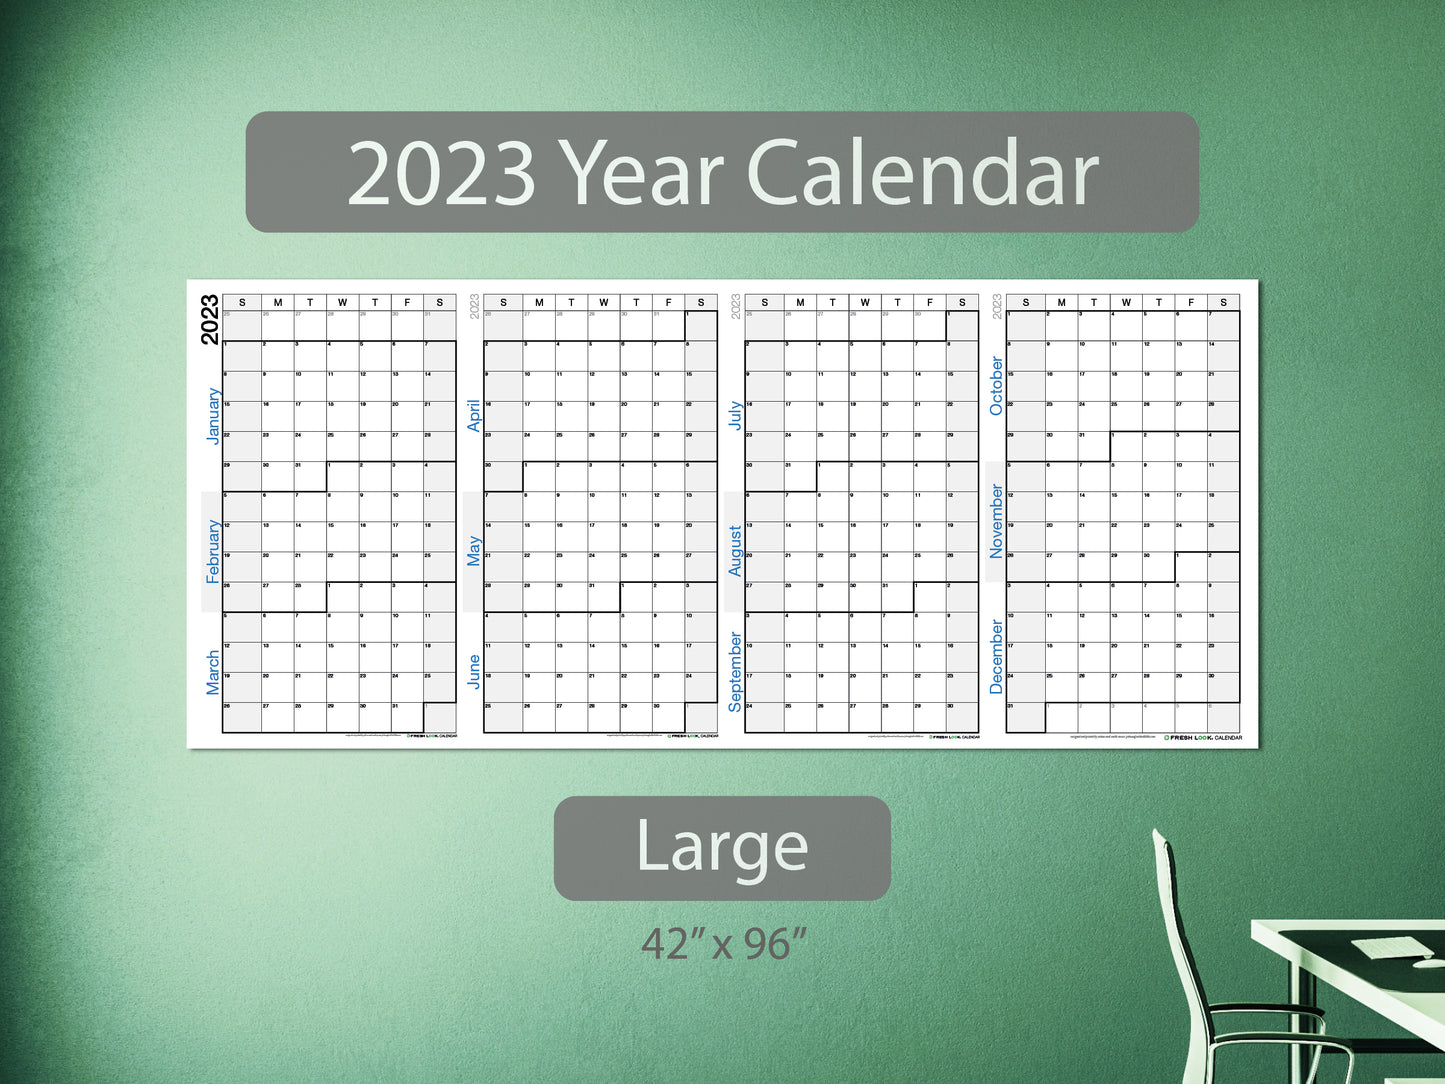 2023 Year Calendar Large